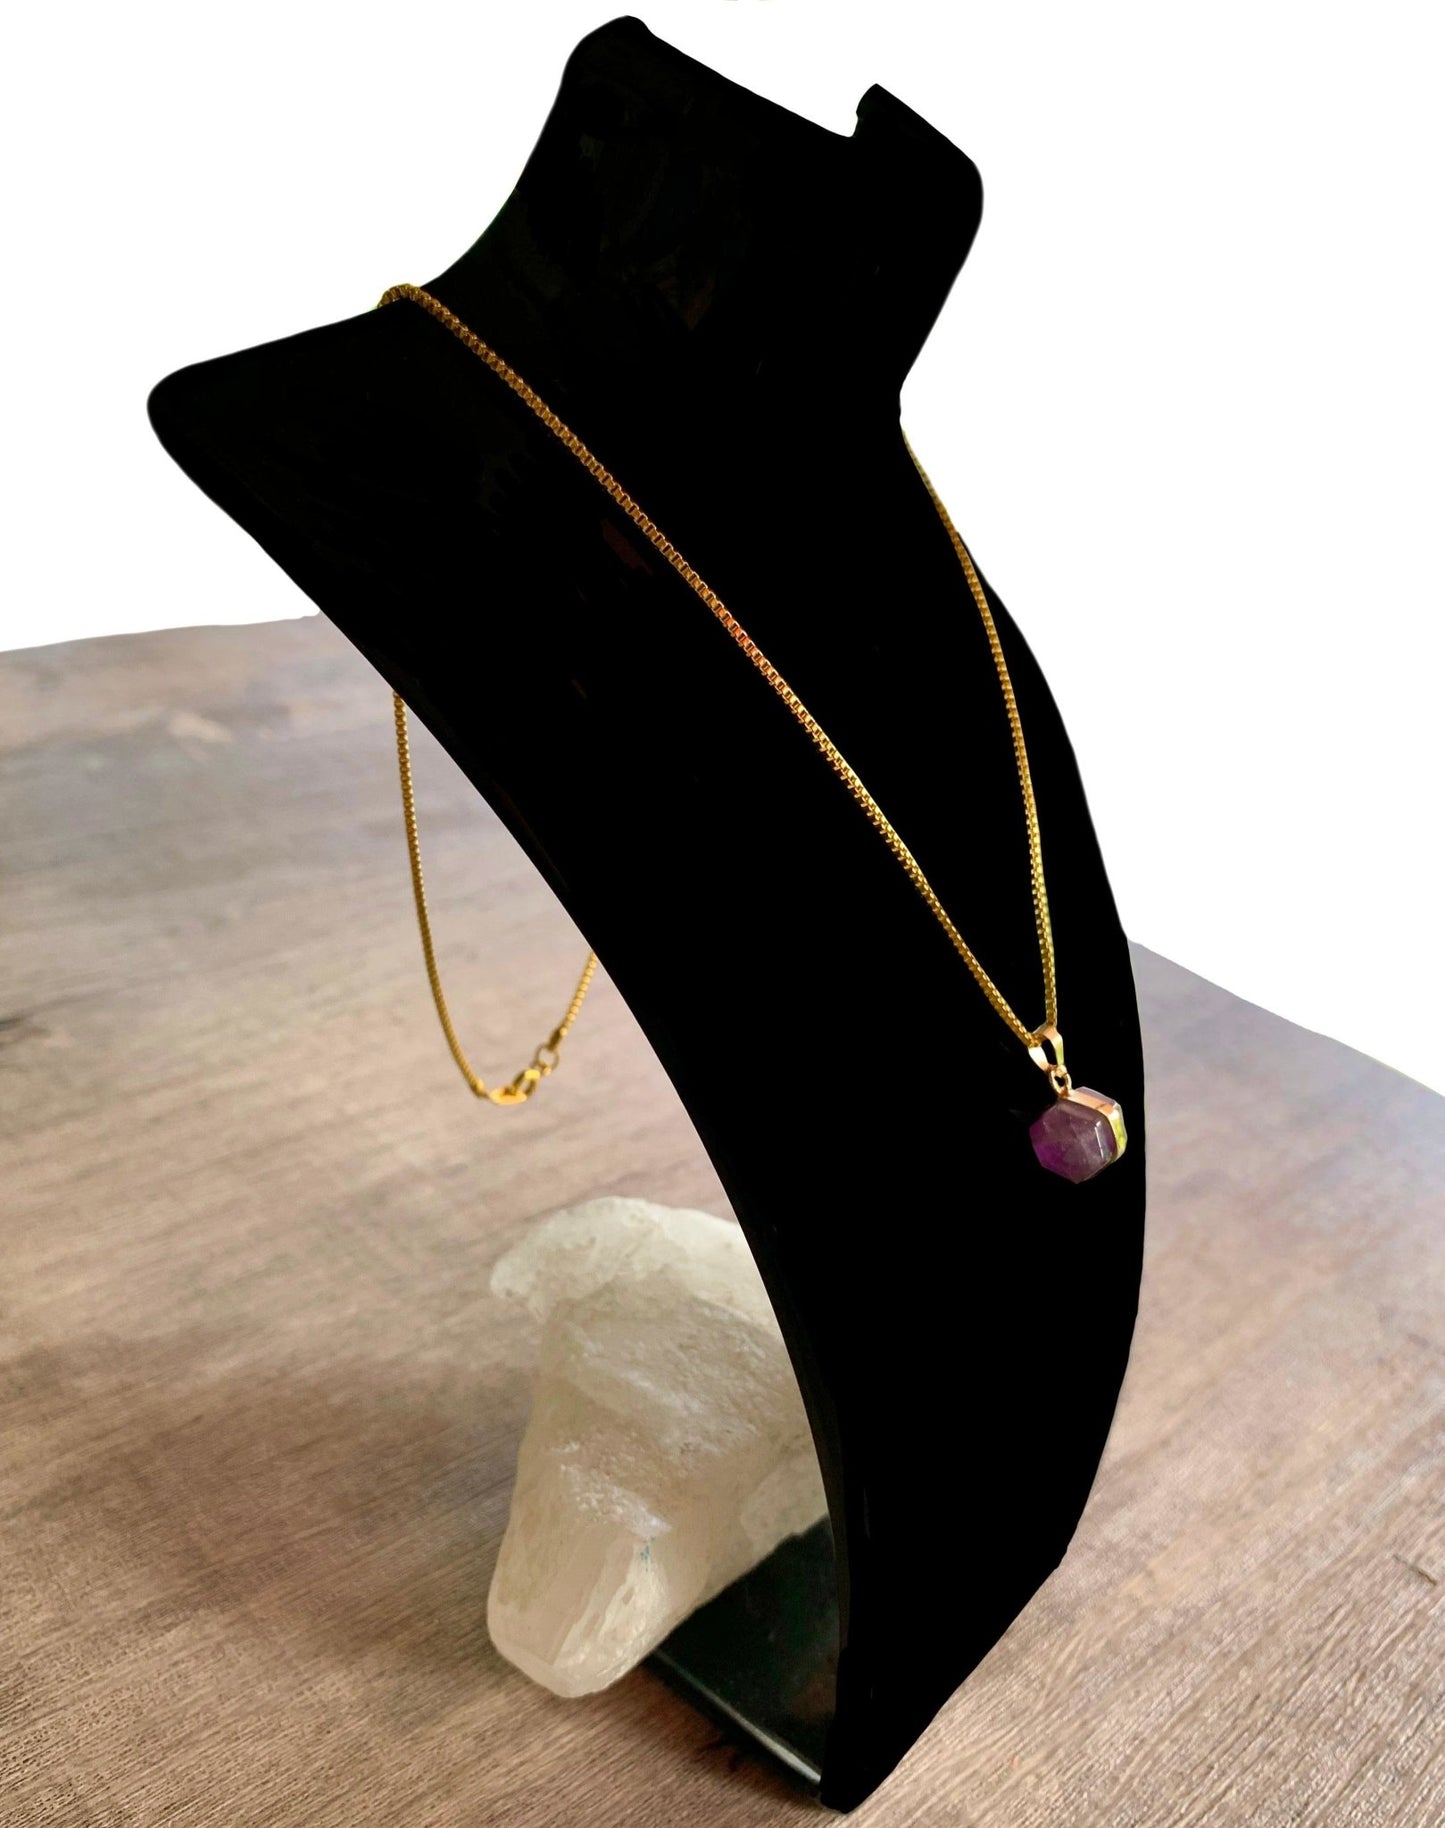 Nami Amethyst Bicone Crystal Pendant on a 20" Necklace - Born Mystics